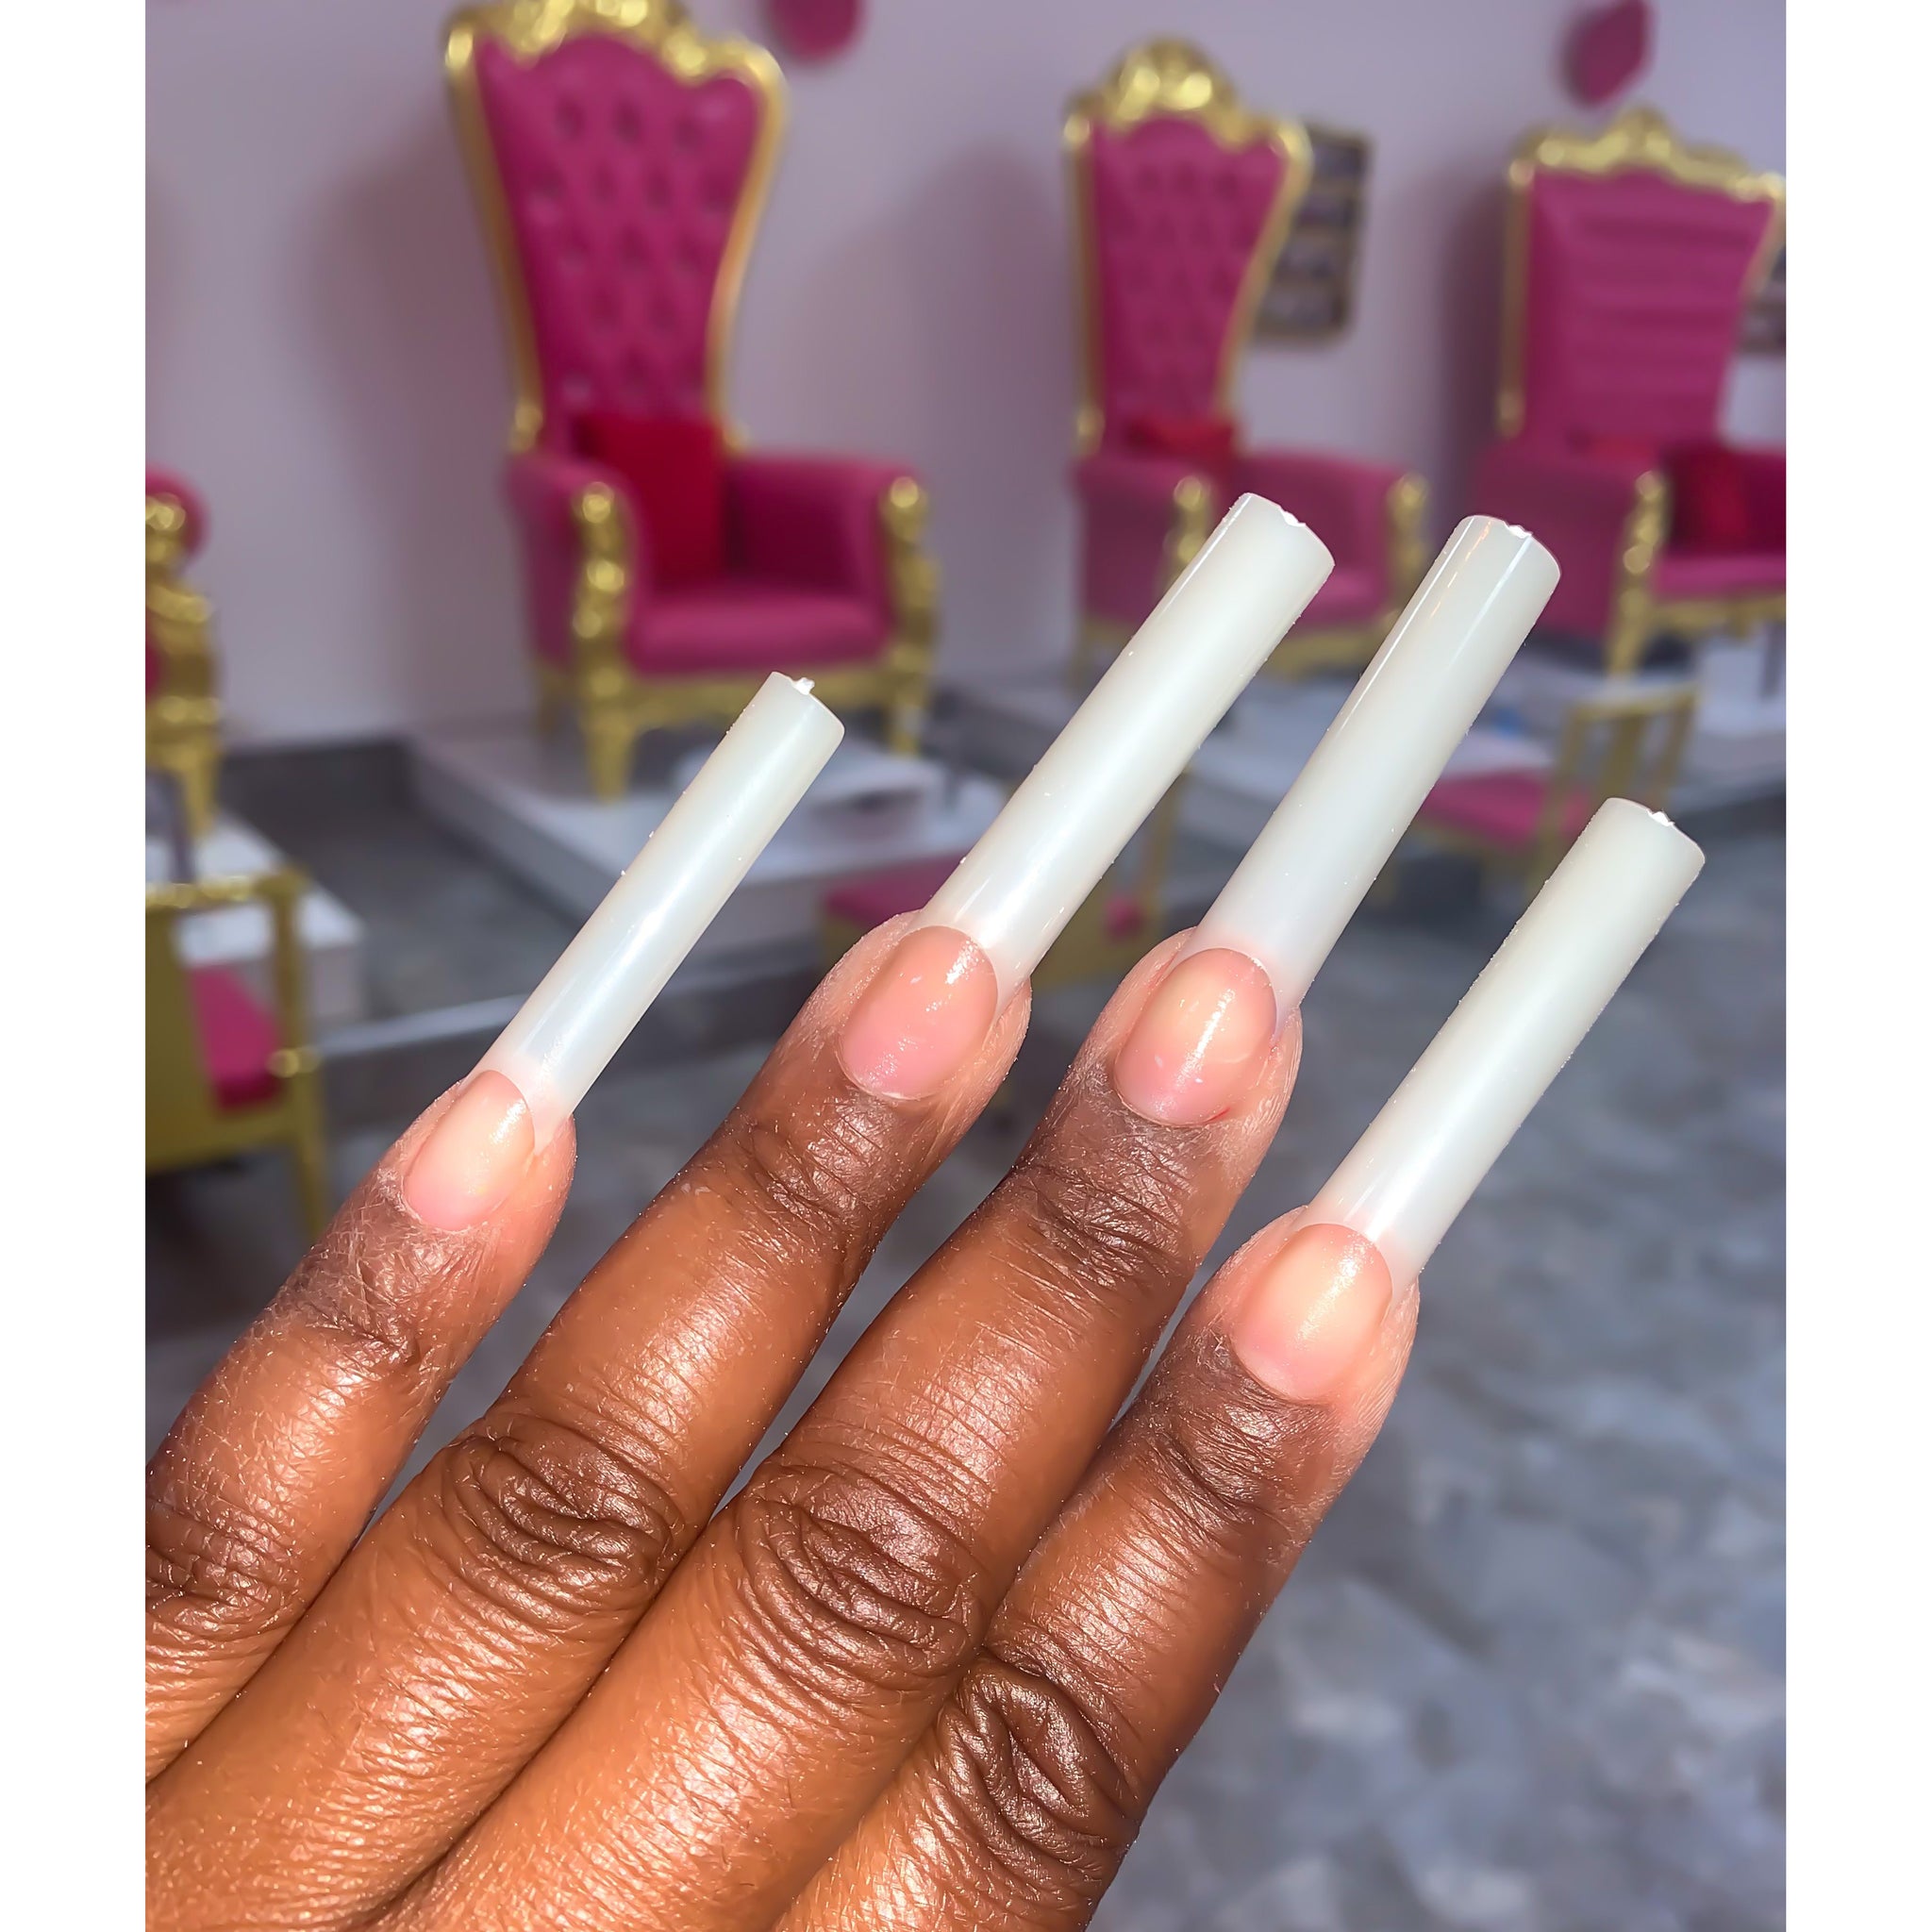 Pink nails set using 2XL Square No C Curve nails tips